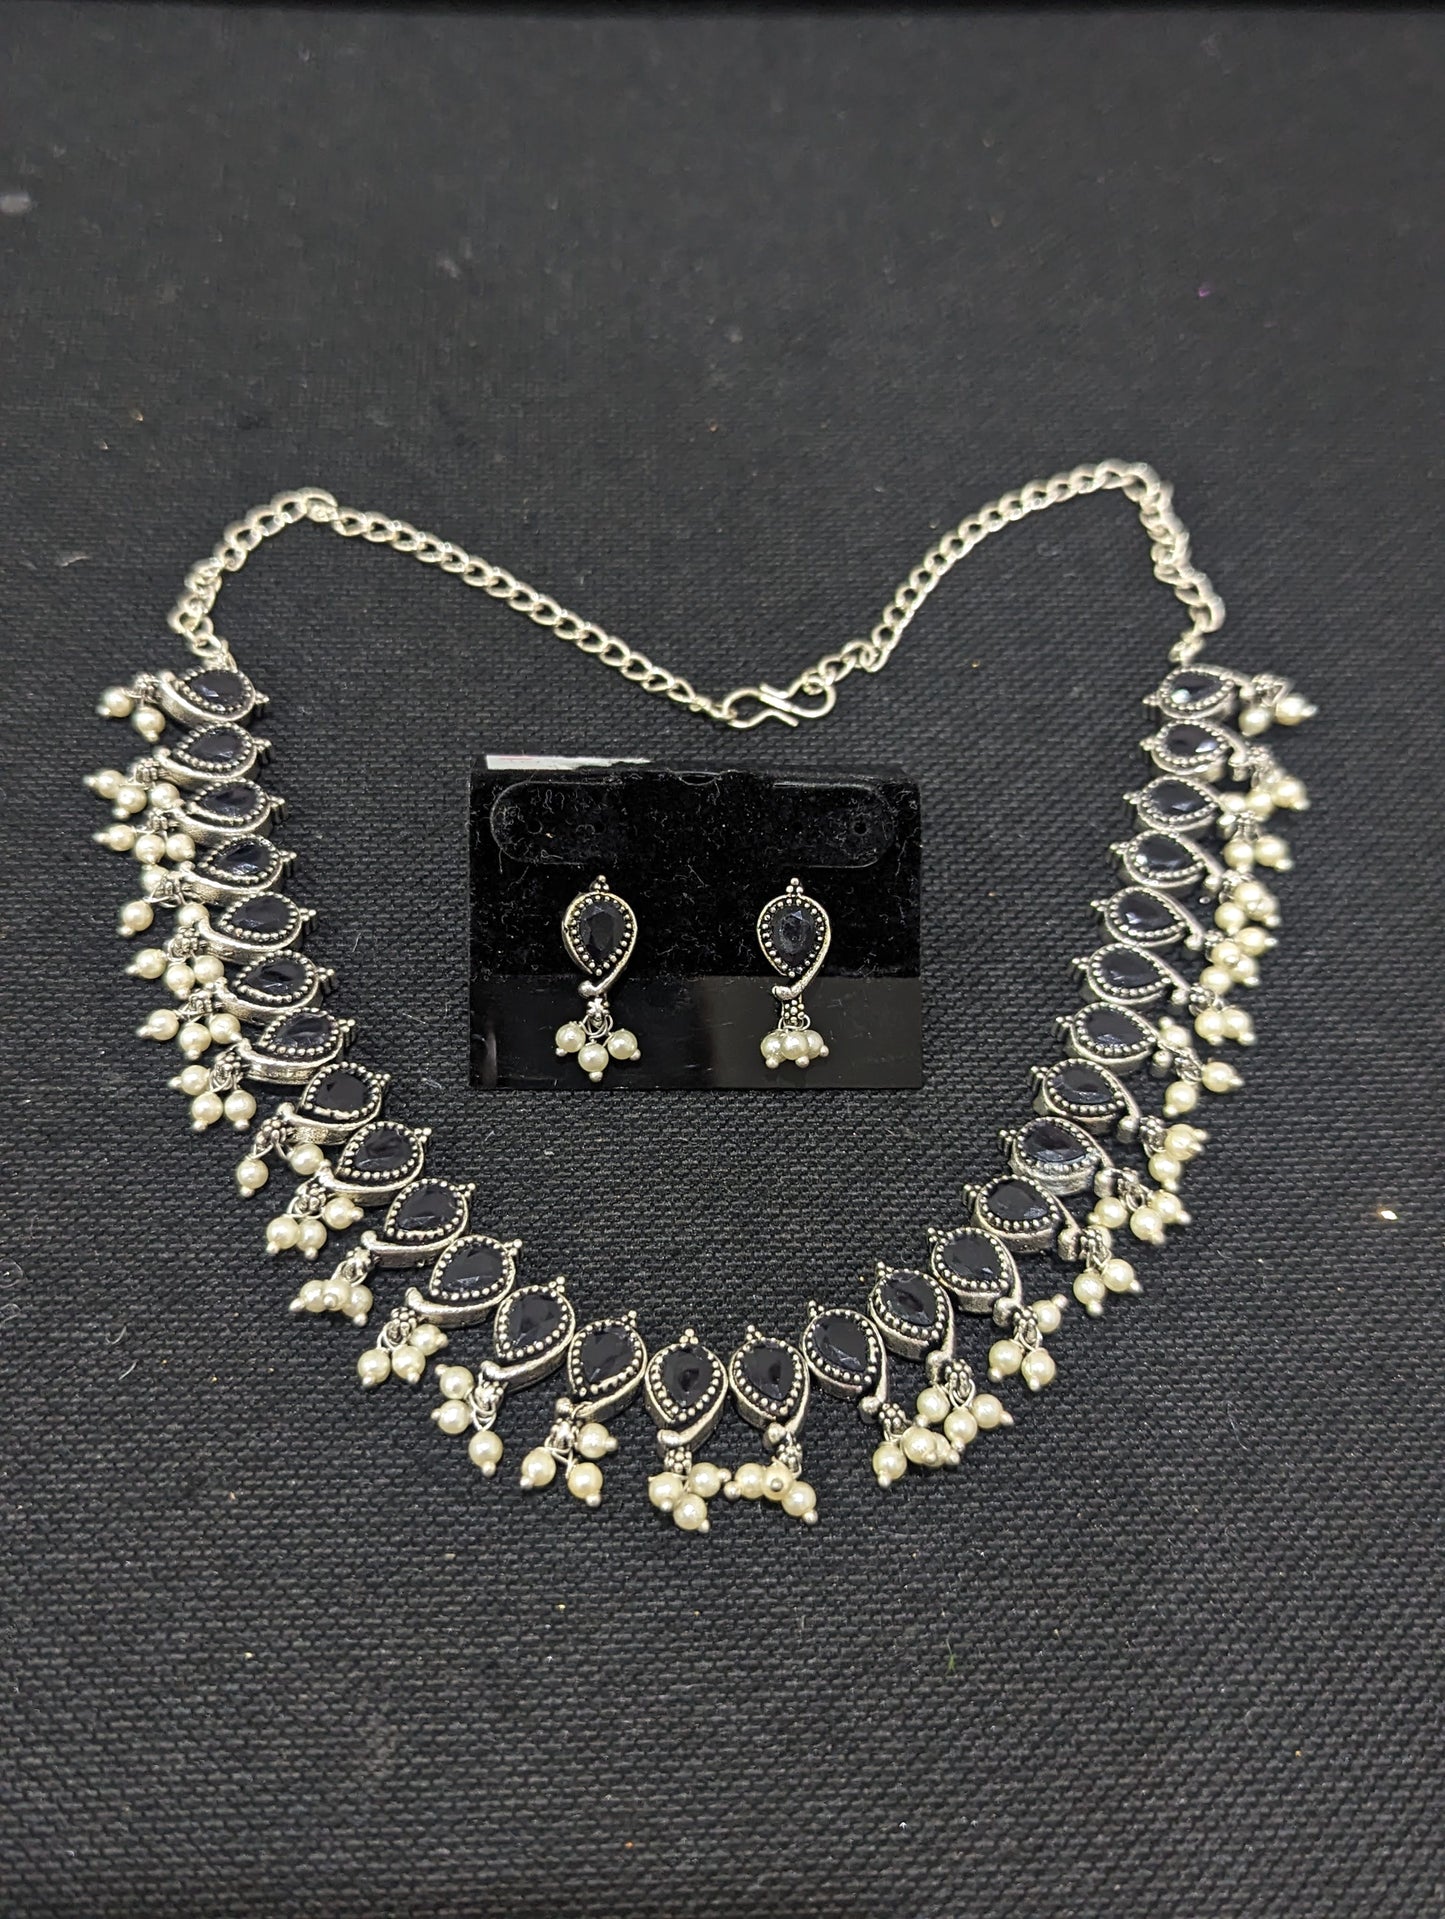 Oxidized silver Mango Choker Necklace set